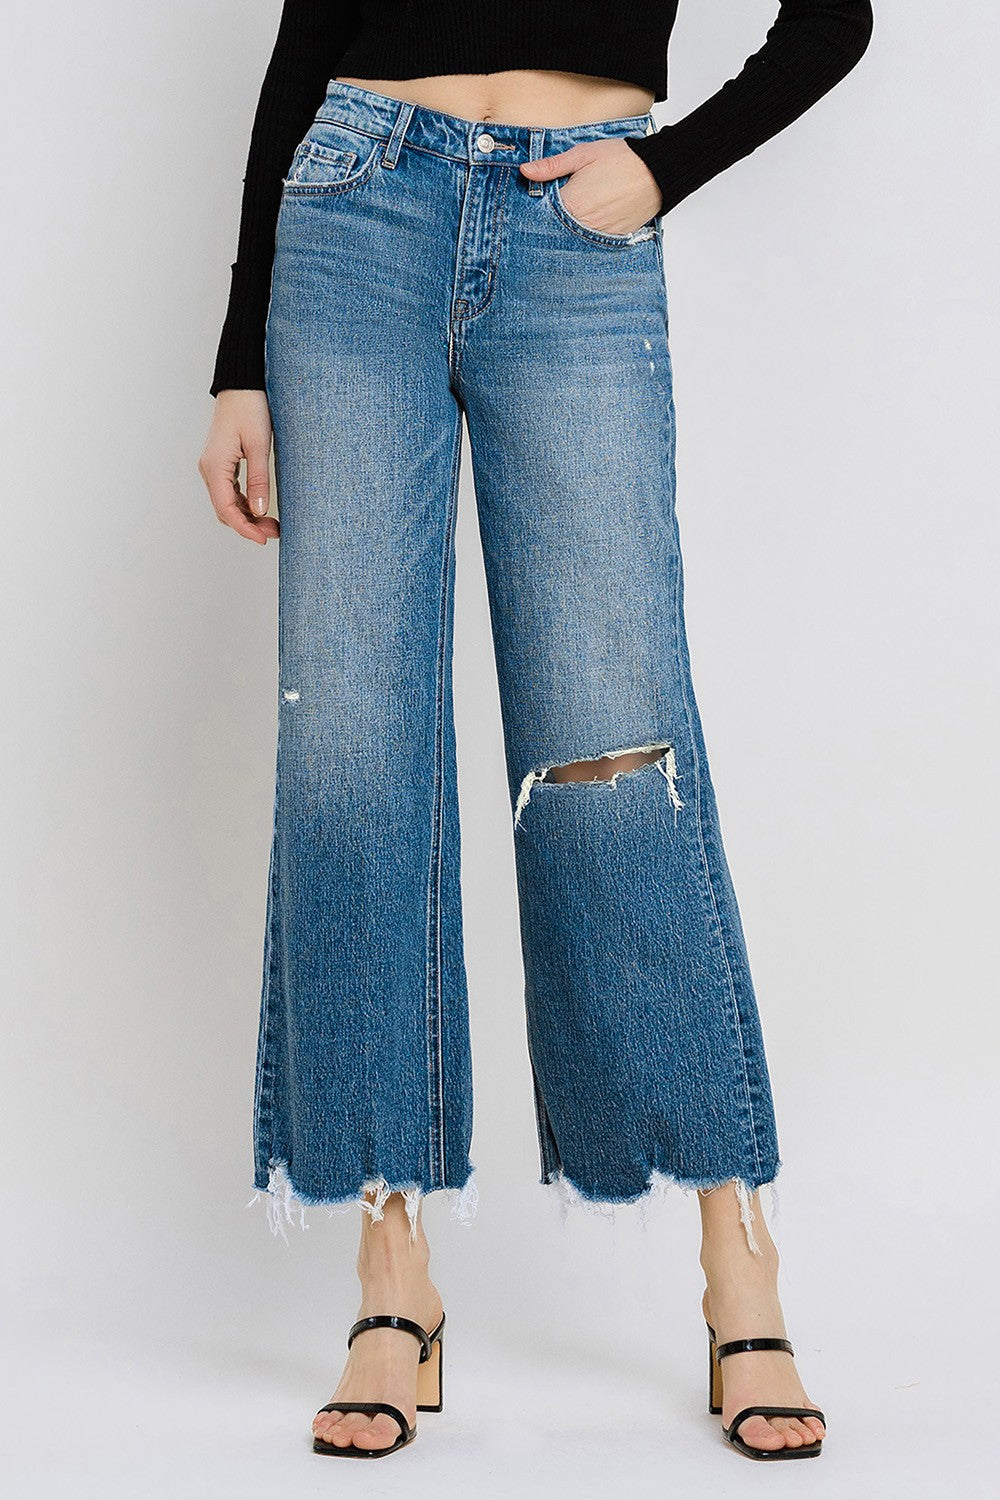 Olivia Wide Leg Jeans